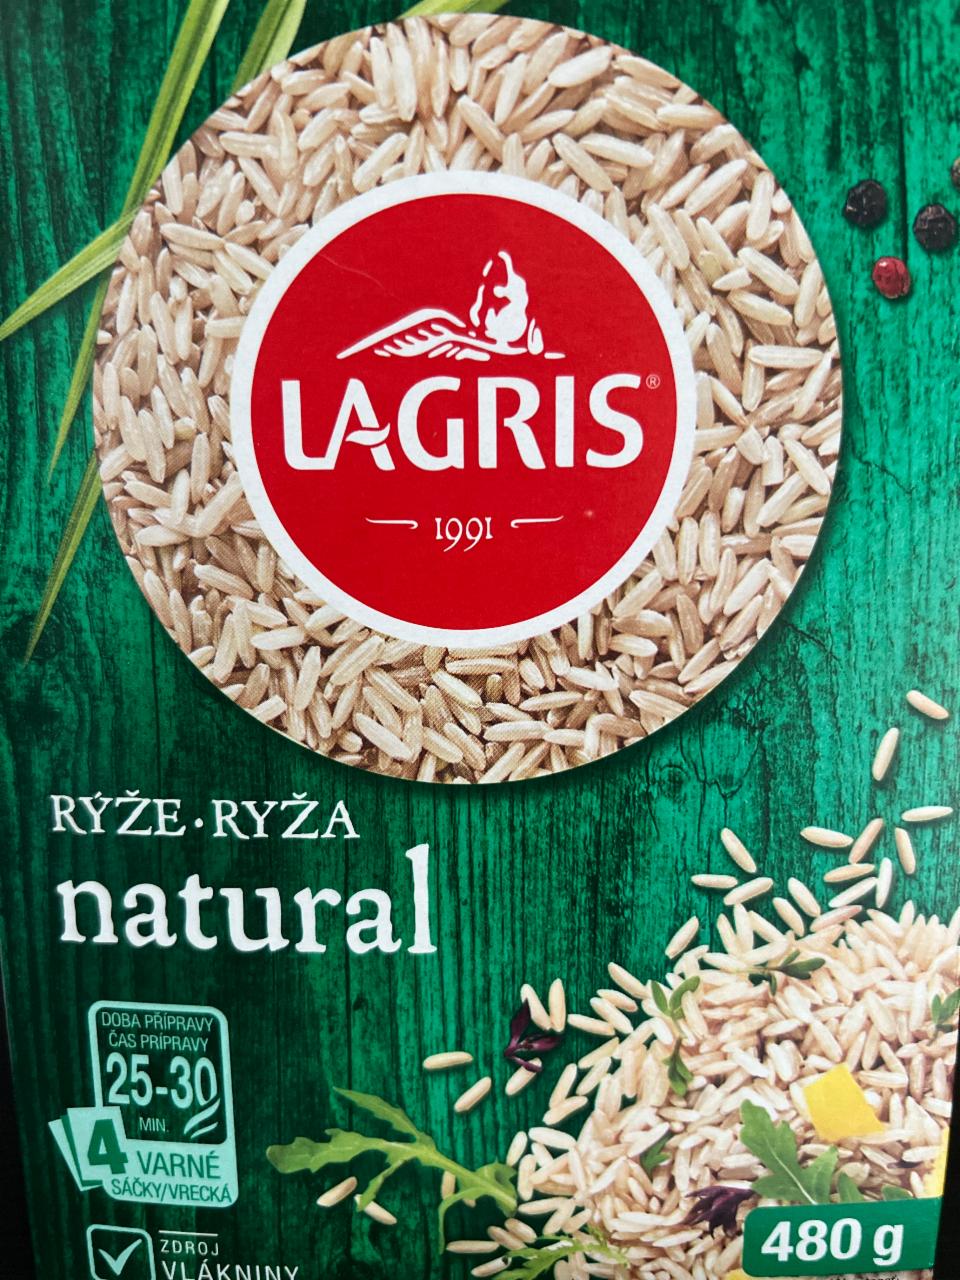 Képek - Lagris Natural főzőtasakos rizs